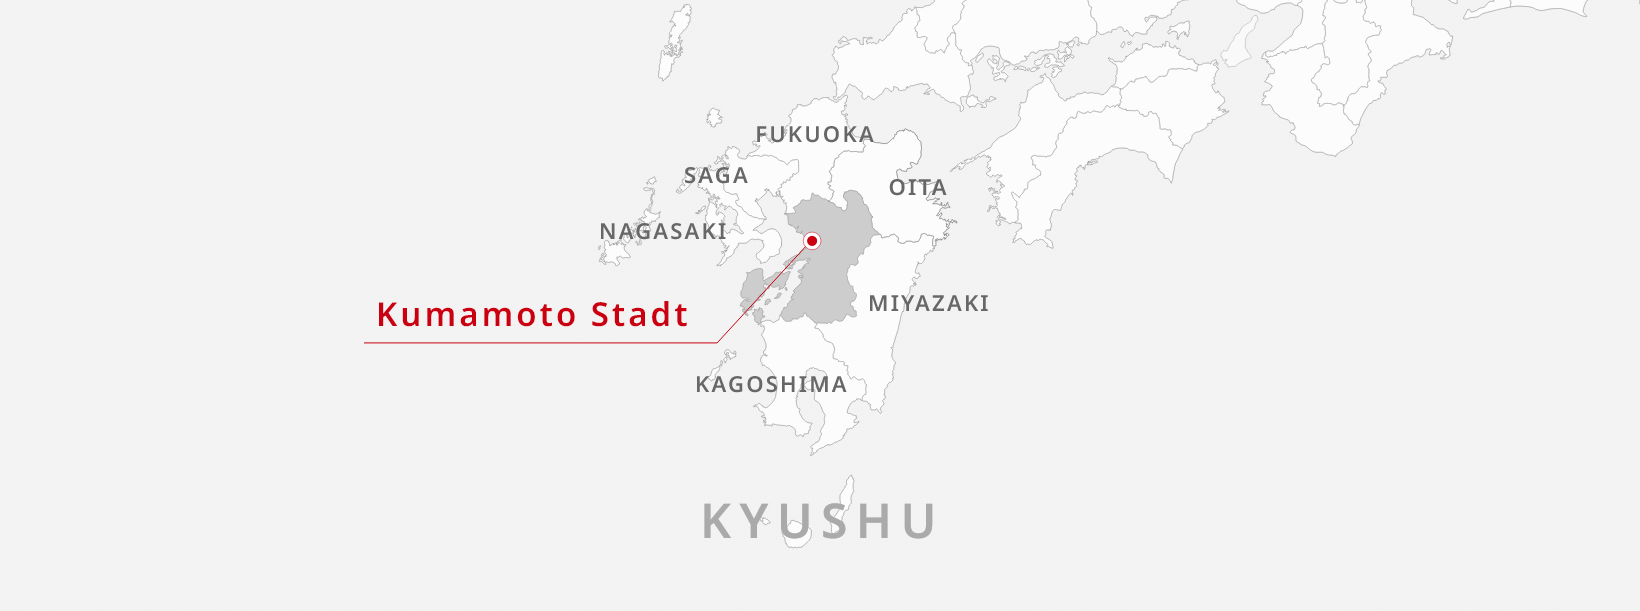 Von innerhalb Kyushus